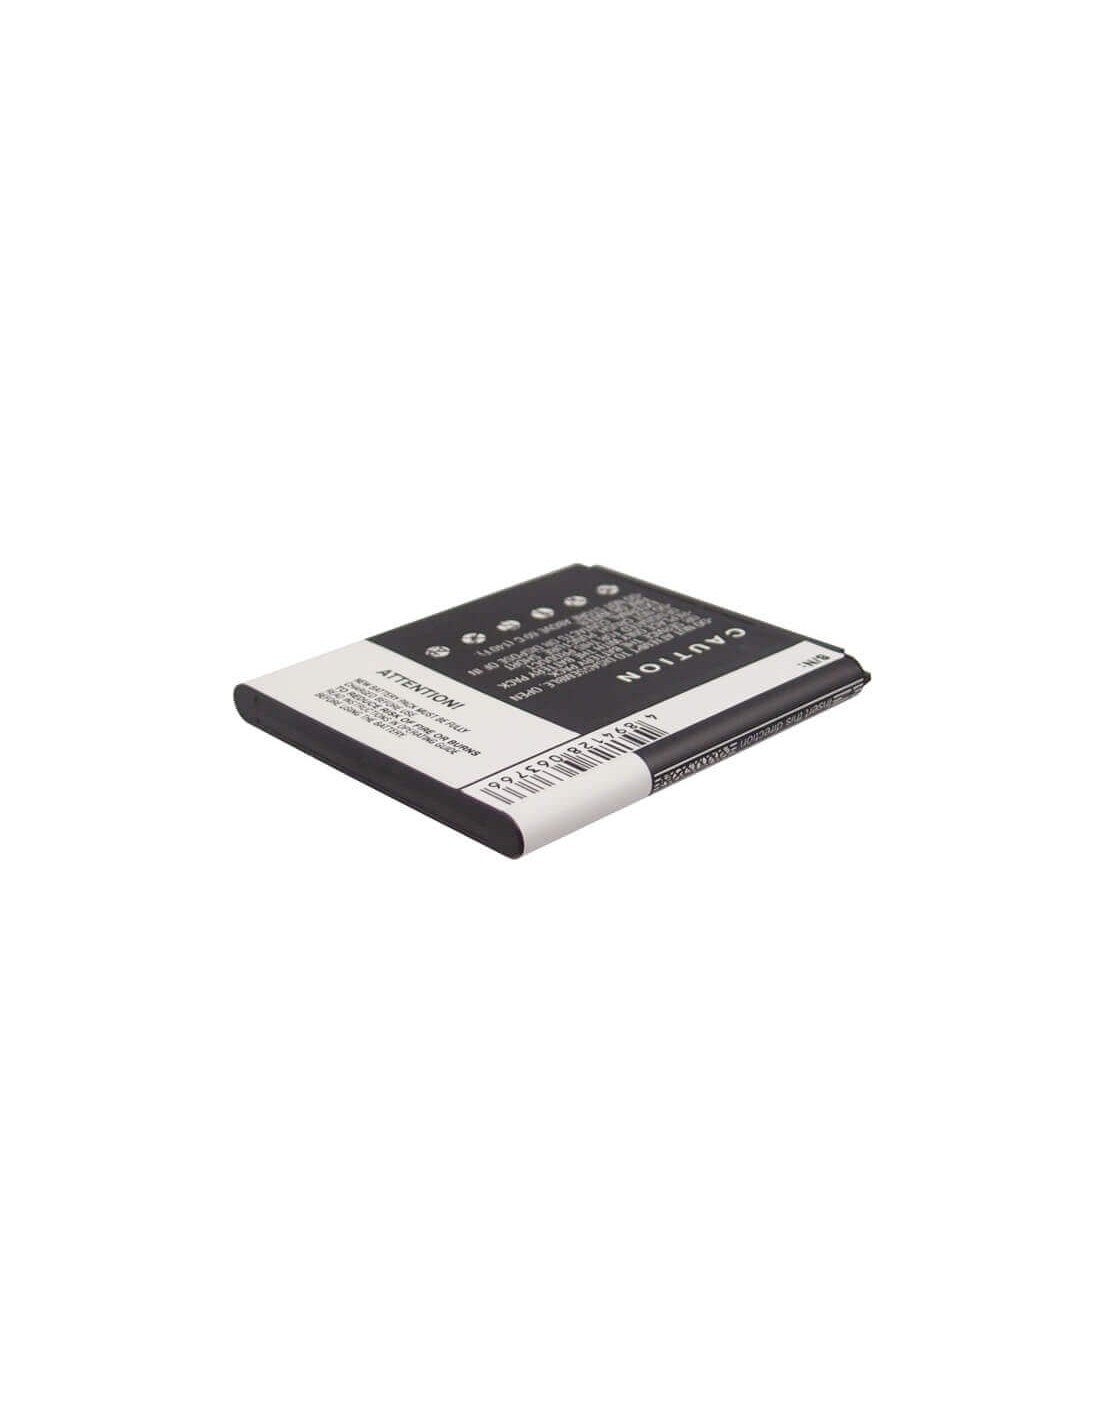 Battery for Samsung Galaxy Beam, GT-I8530, GT-I8550 3.7V, 1800mAh - 6.66Wh